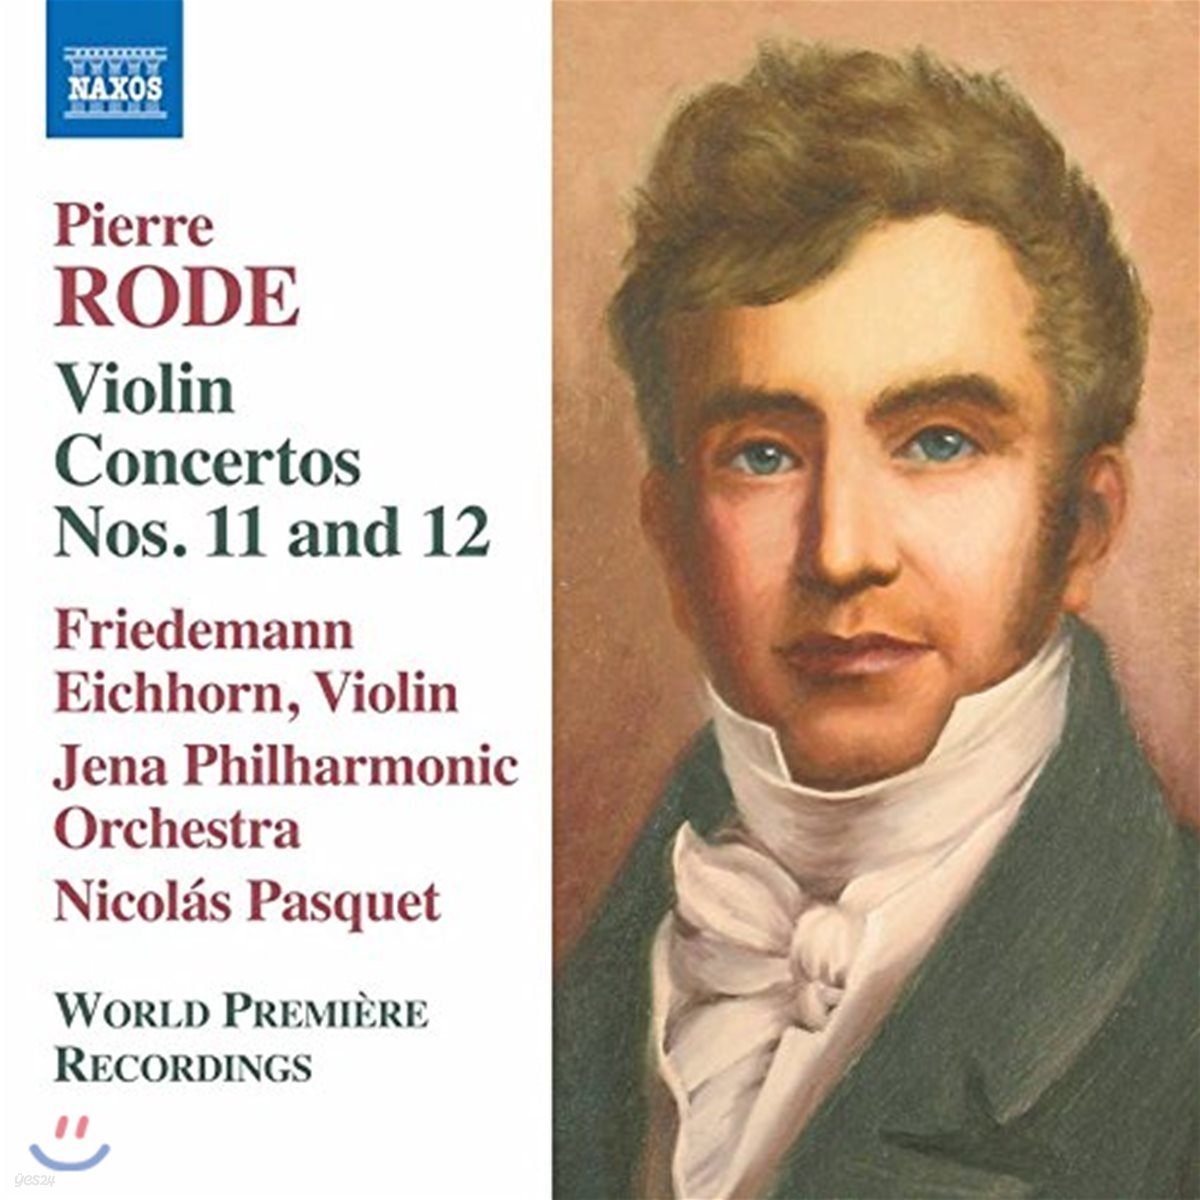 Friedemann Eichhorn 피에르 로드: 바이올린 협주곡 11, 12번 (Pierre Rode: Violin Concertos Nos. 11, 12)